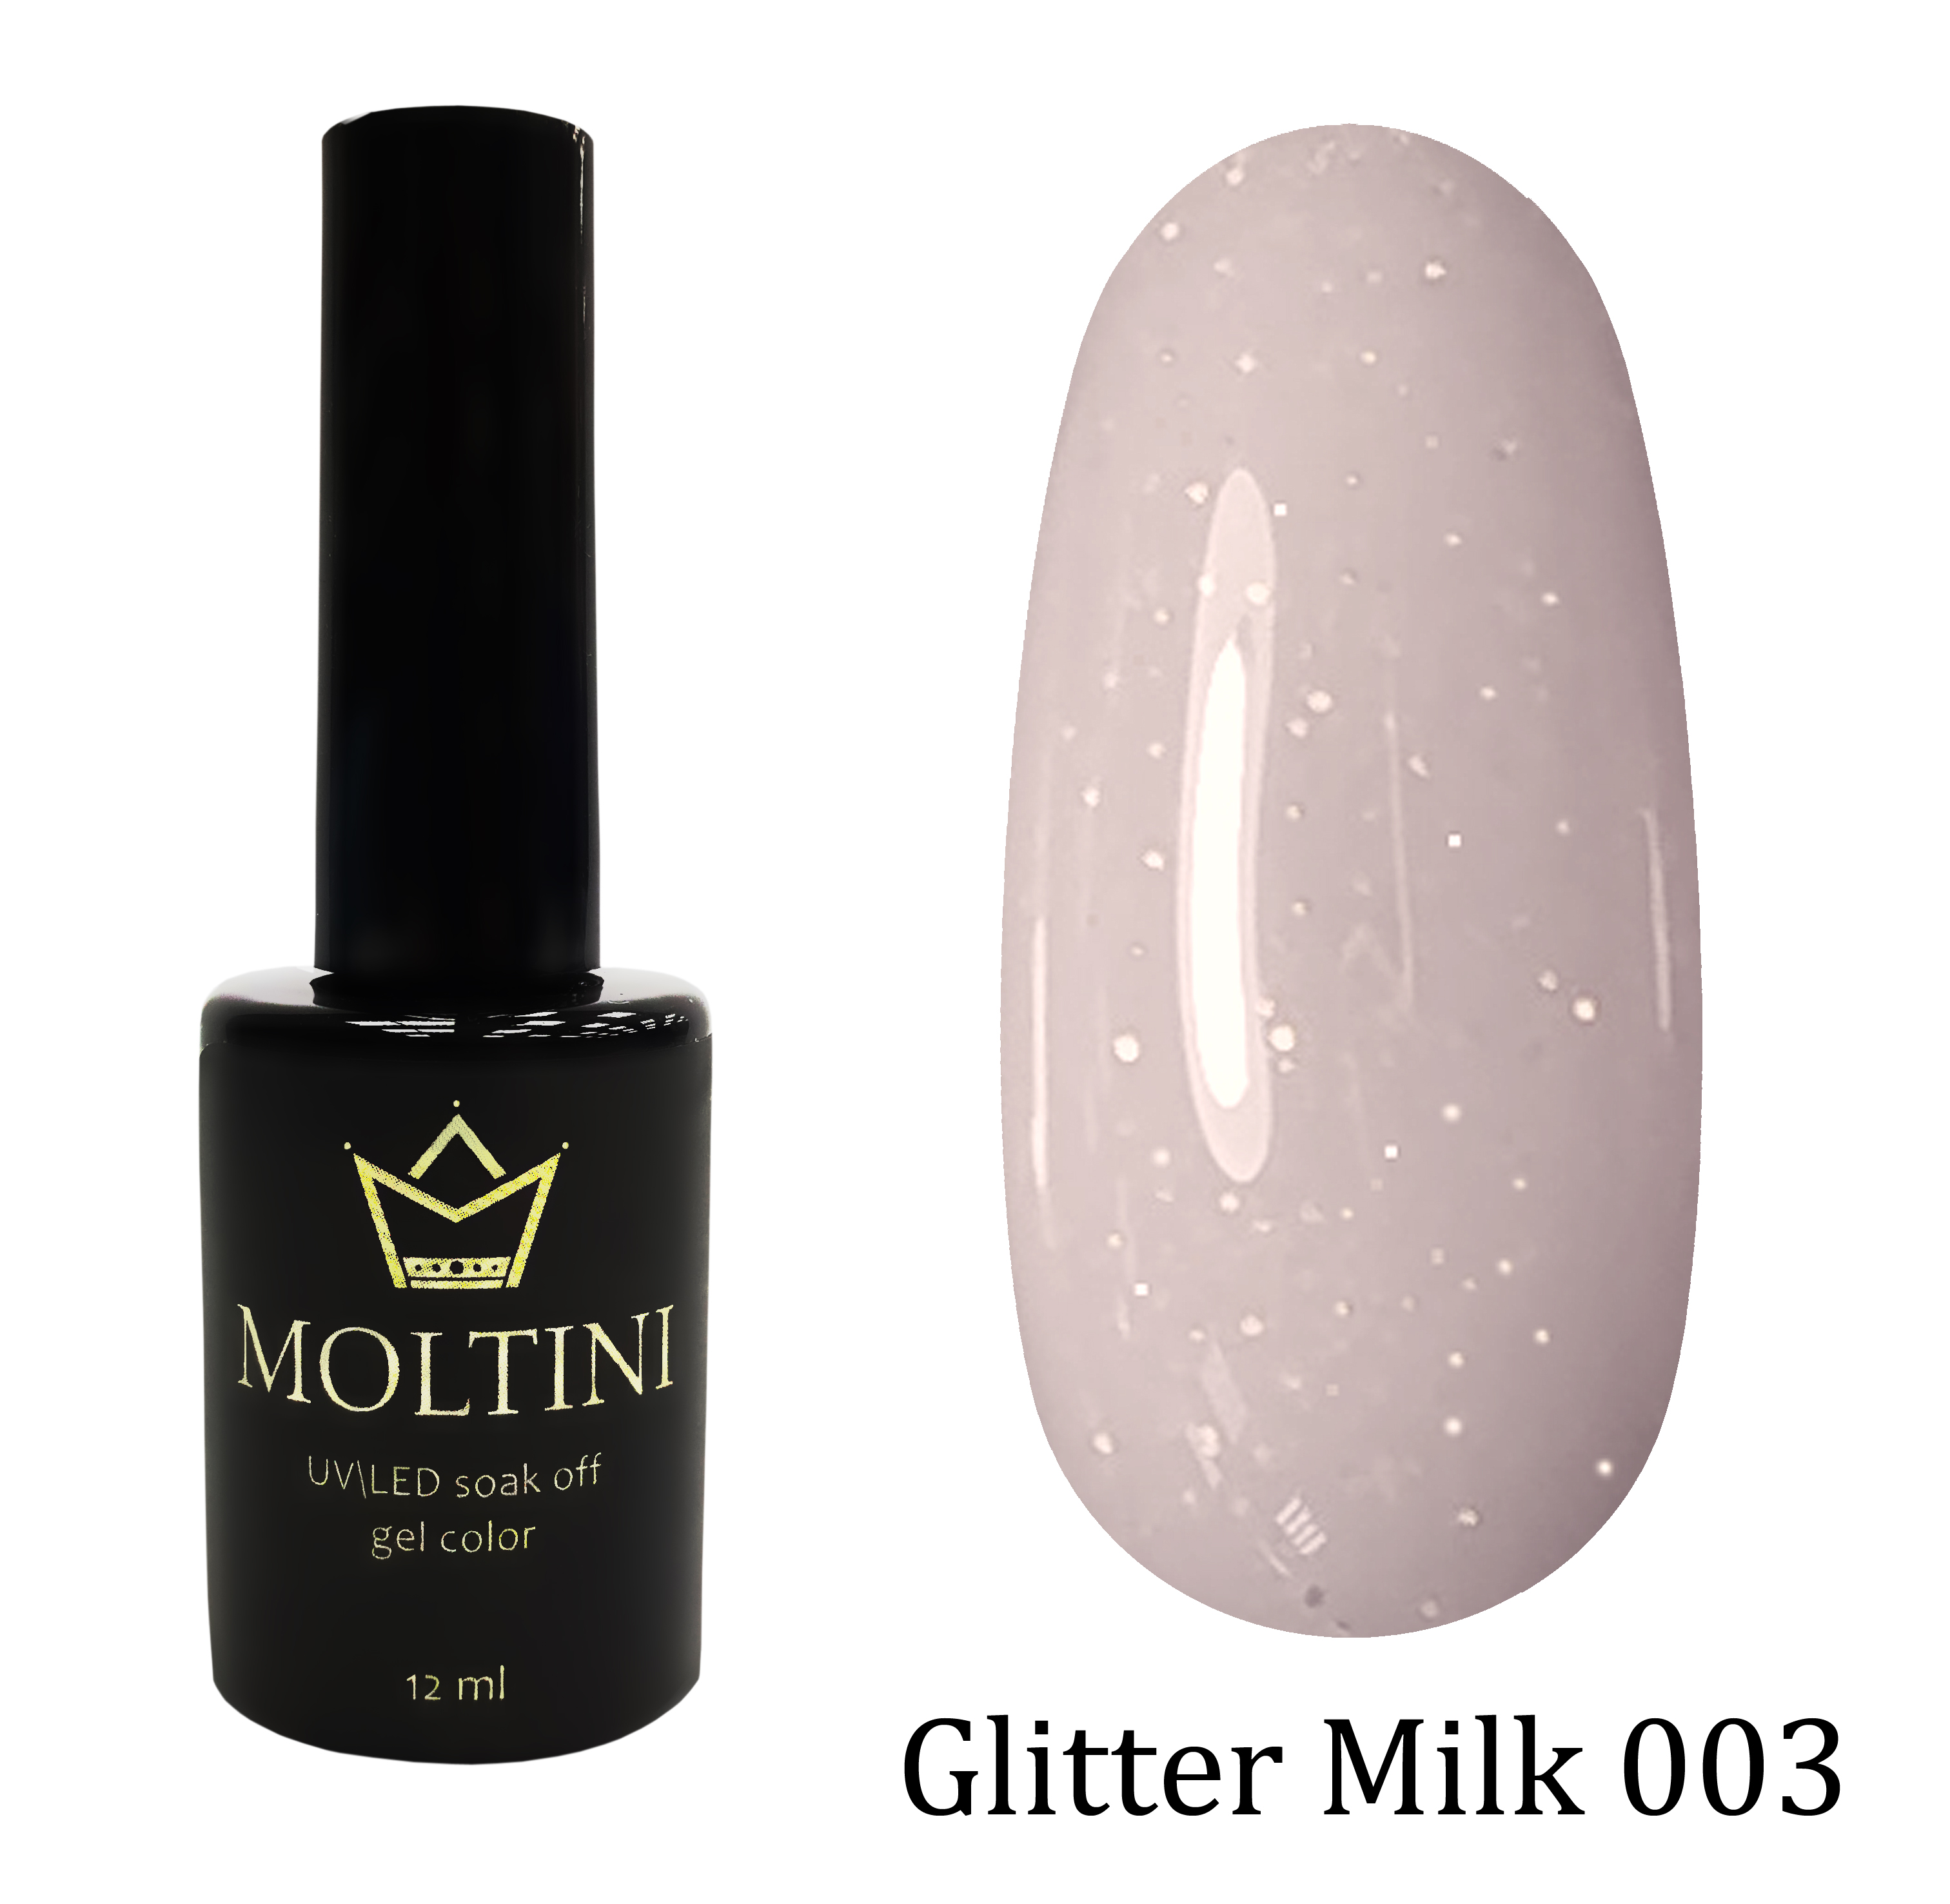 Moltini цветной гель-лак Glitter Milk 003, 12 мл